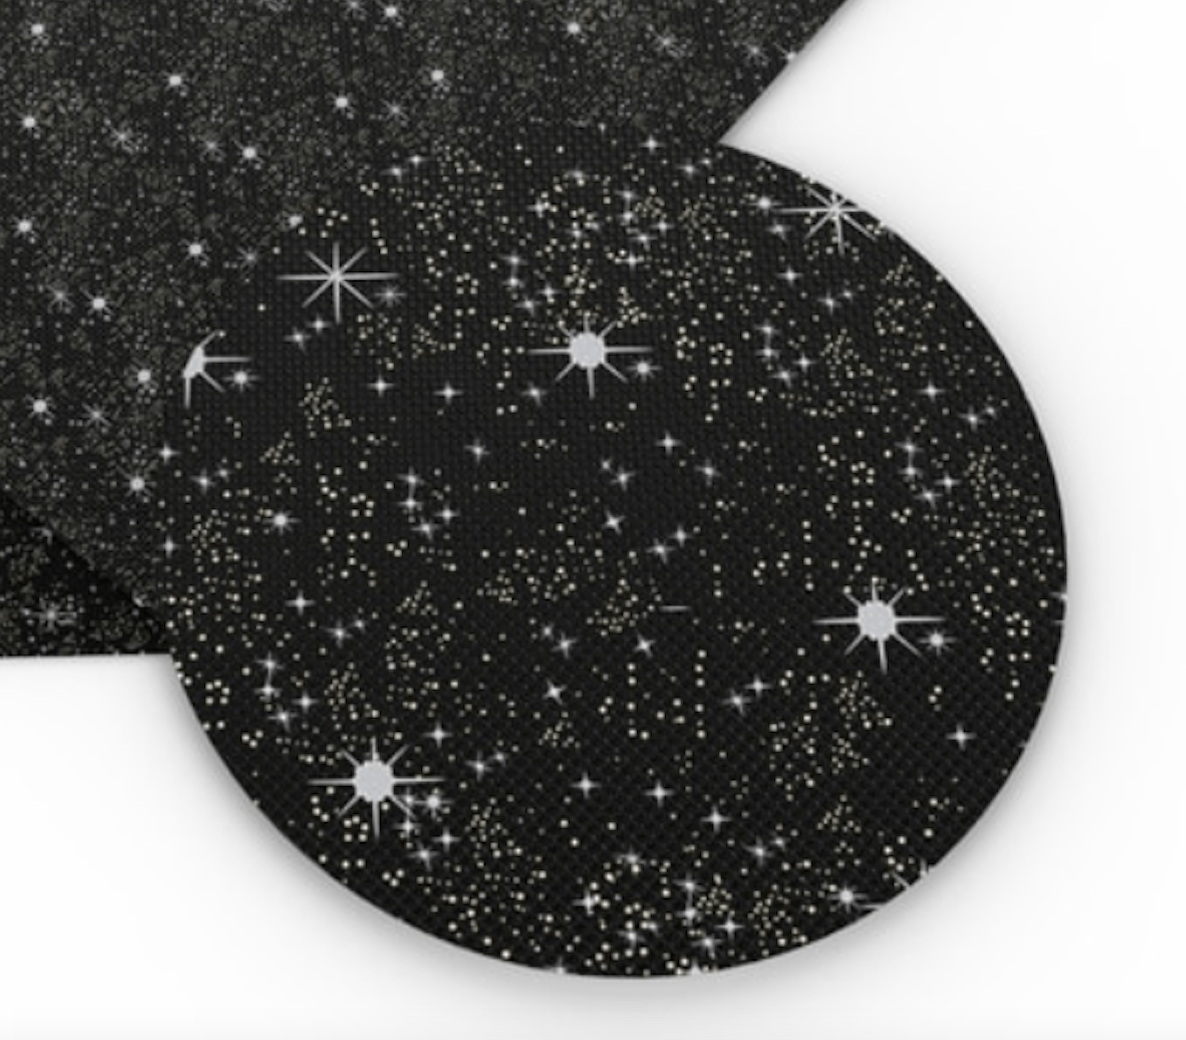 Leatherette Basics 20*33cm Starry Night Sky Black and White Printed Long Leatherette Sheet, Basics